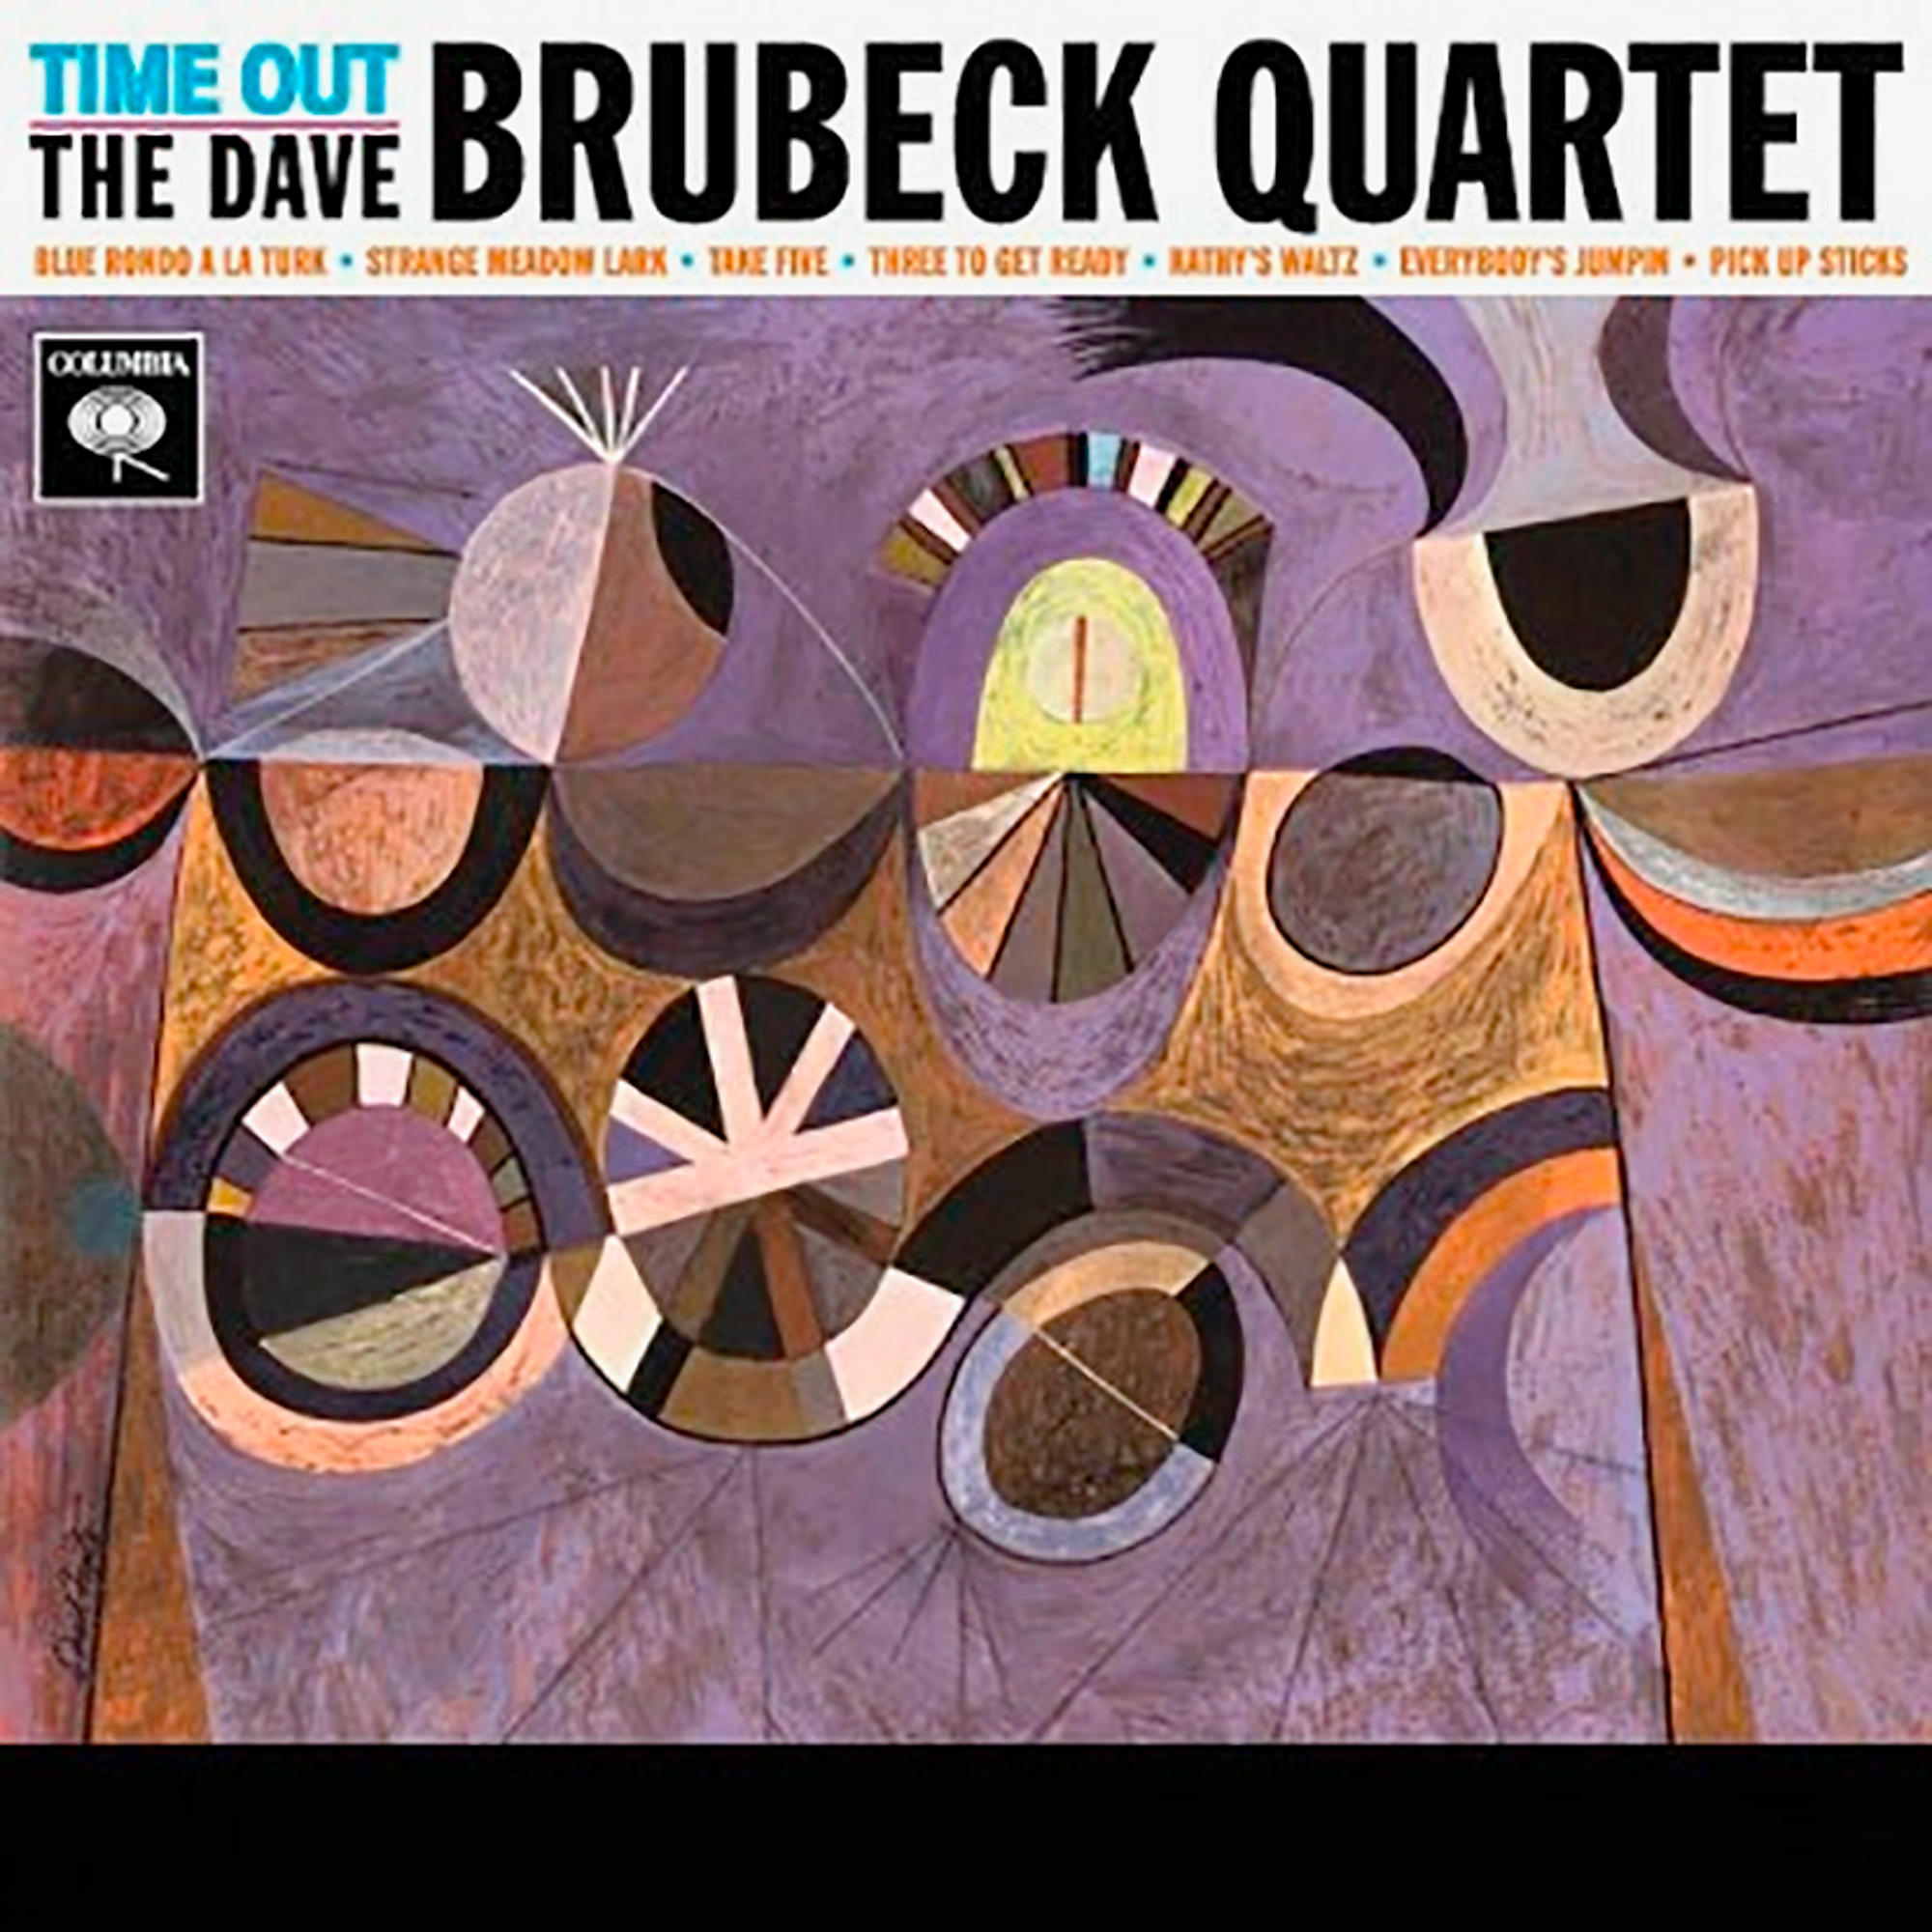 - (Vinyl) Brubeck Dave - Out Time The Quartet (Remastered)